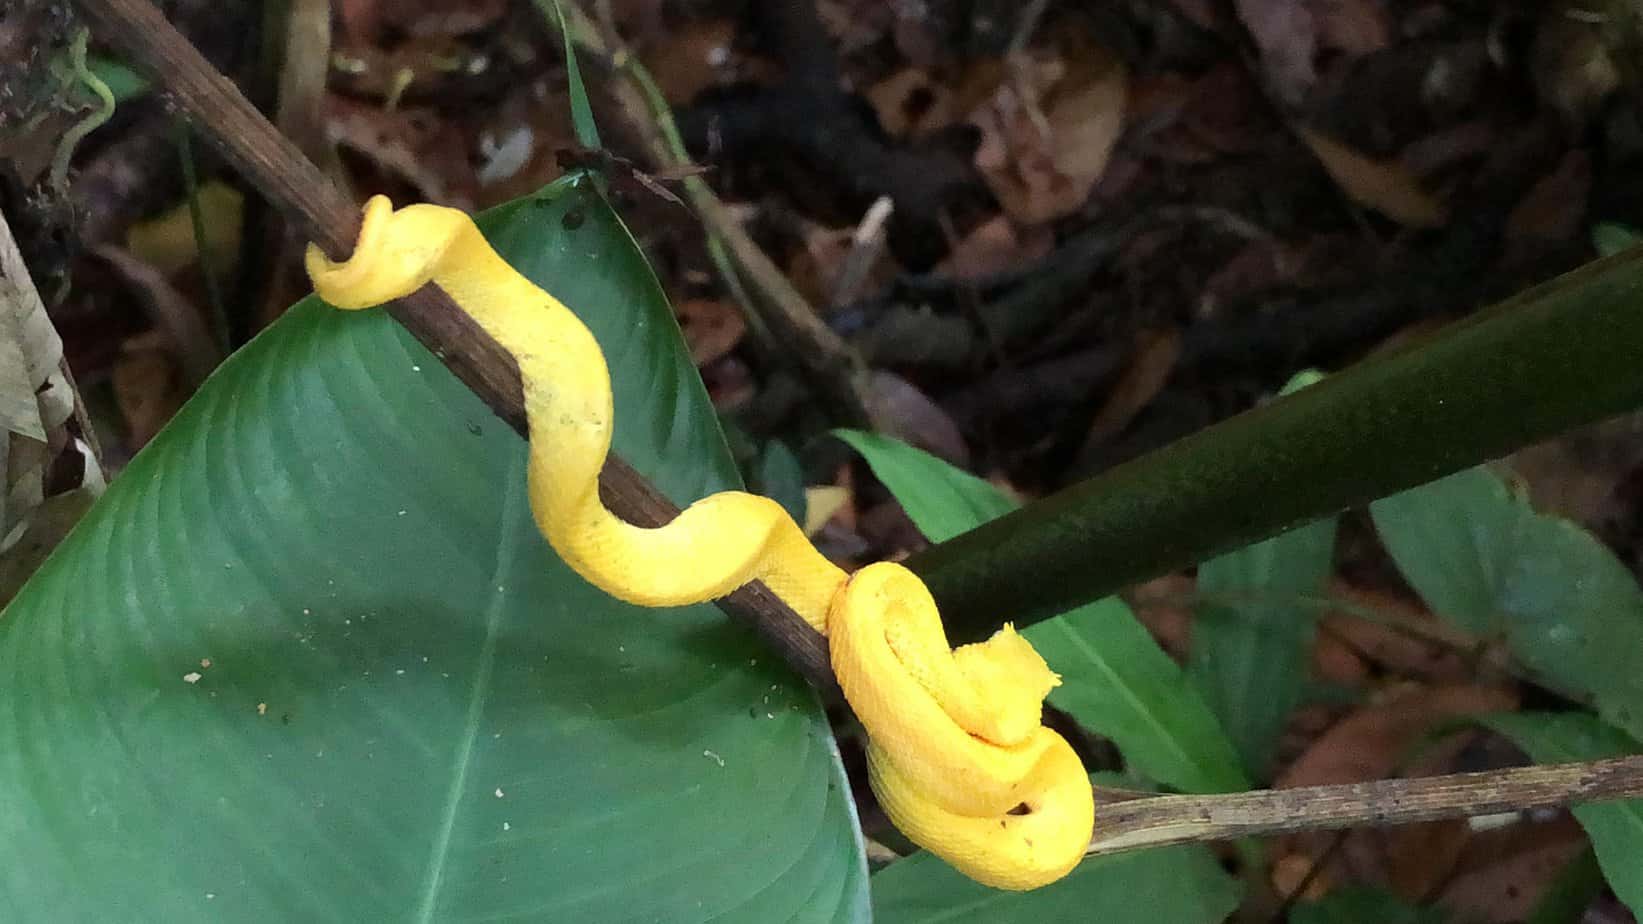 Viper found at Gandoca Manzanillo